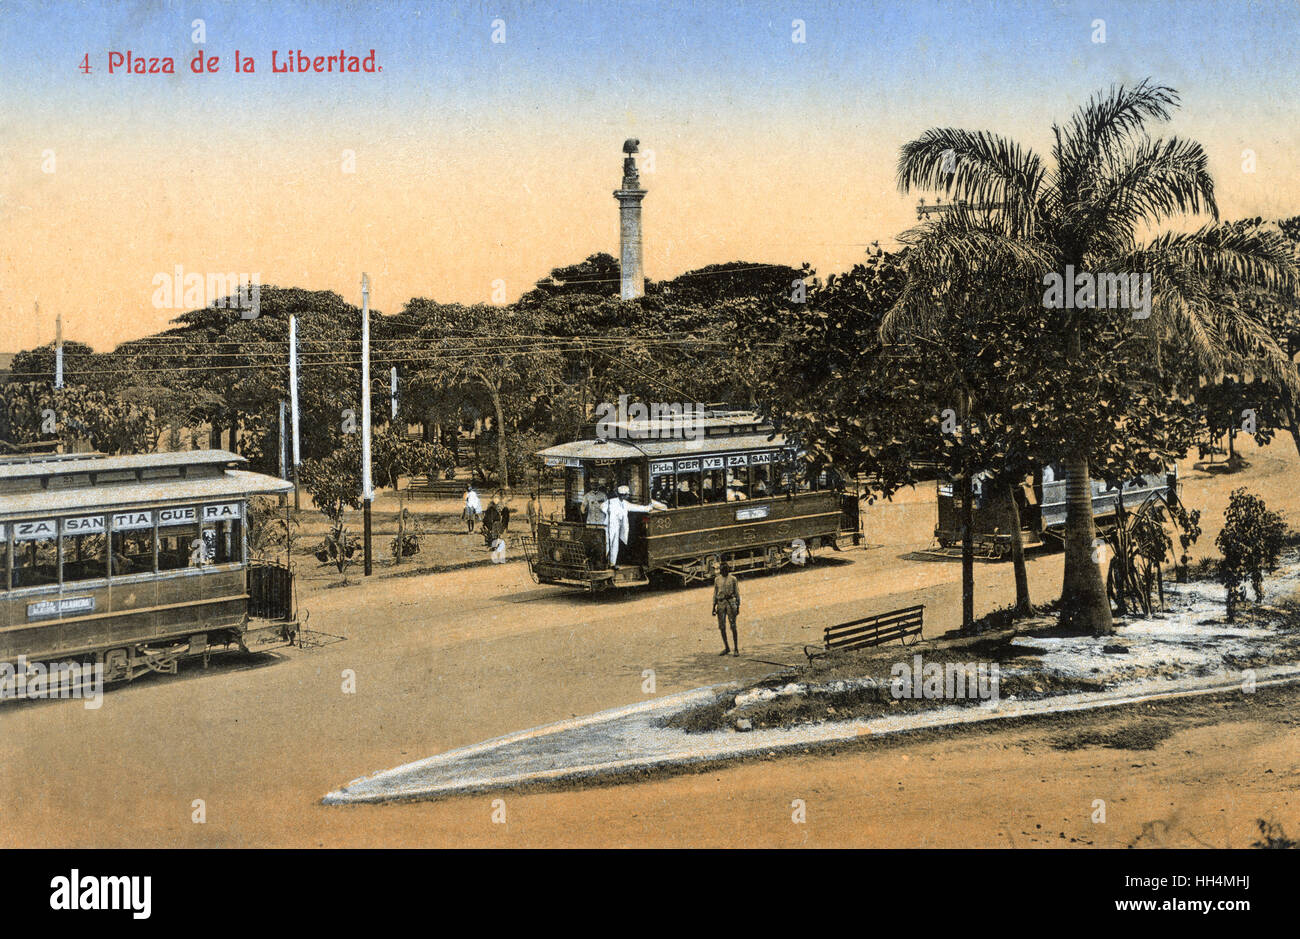 Plaza de la Libertad (Freedom Square, now called Plaza de Marte), Santiago de Cuba, Cuba, with tramcars. Stock Photo